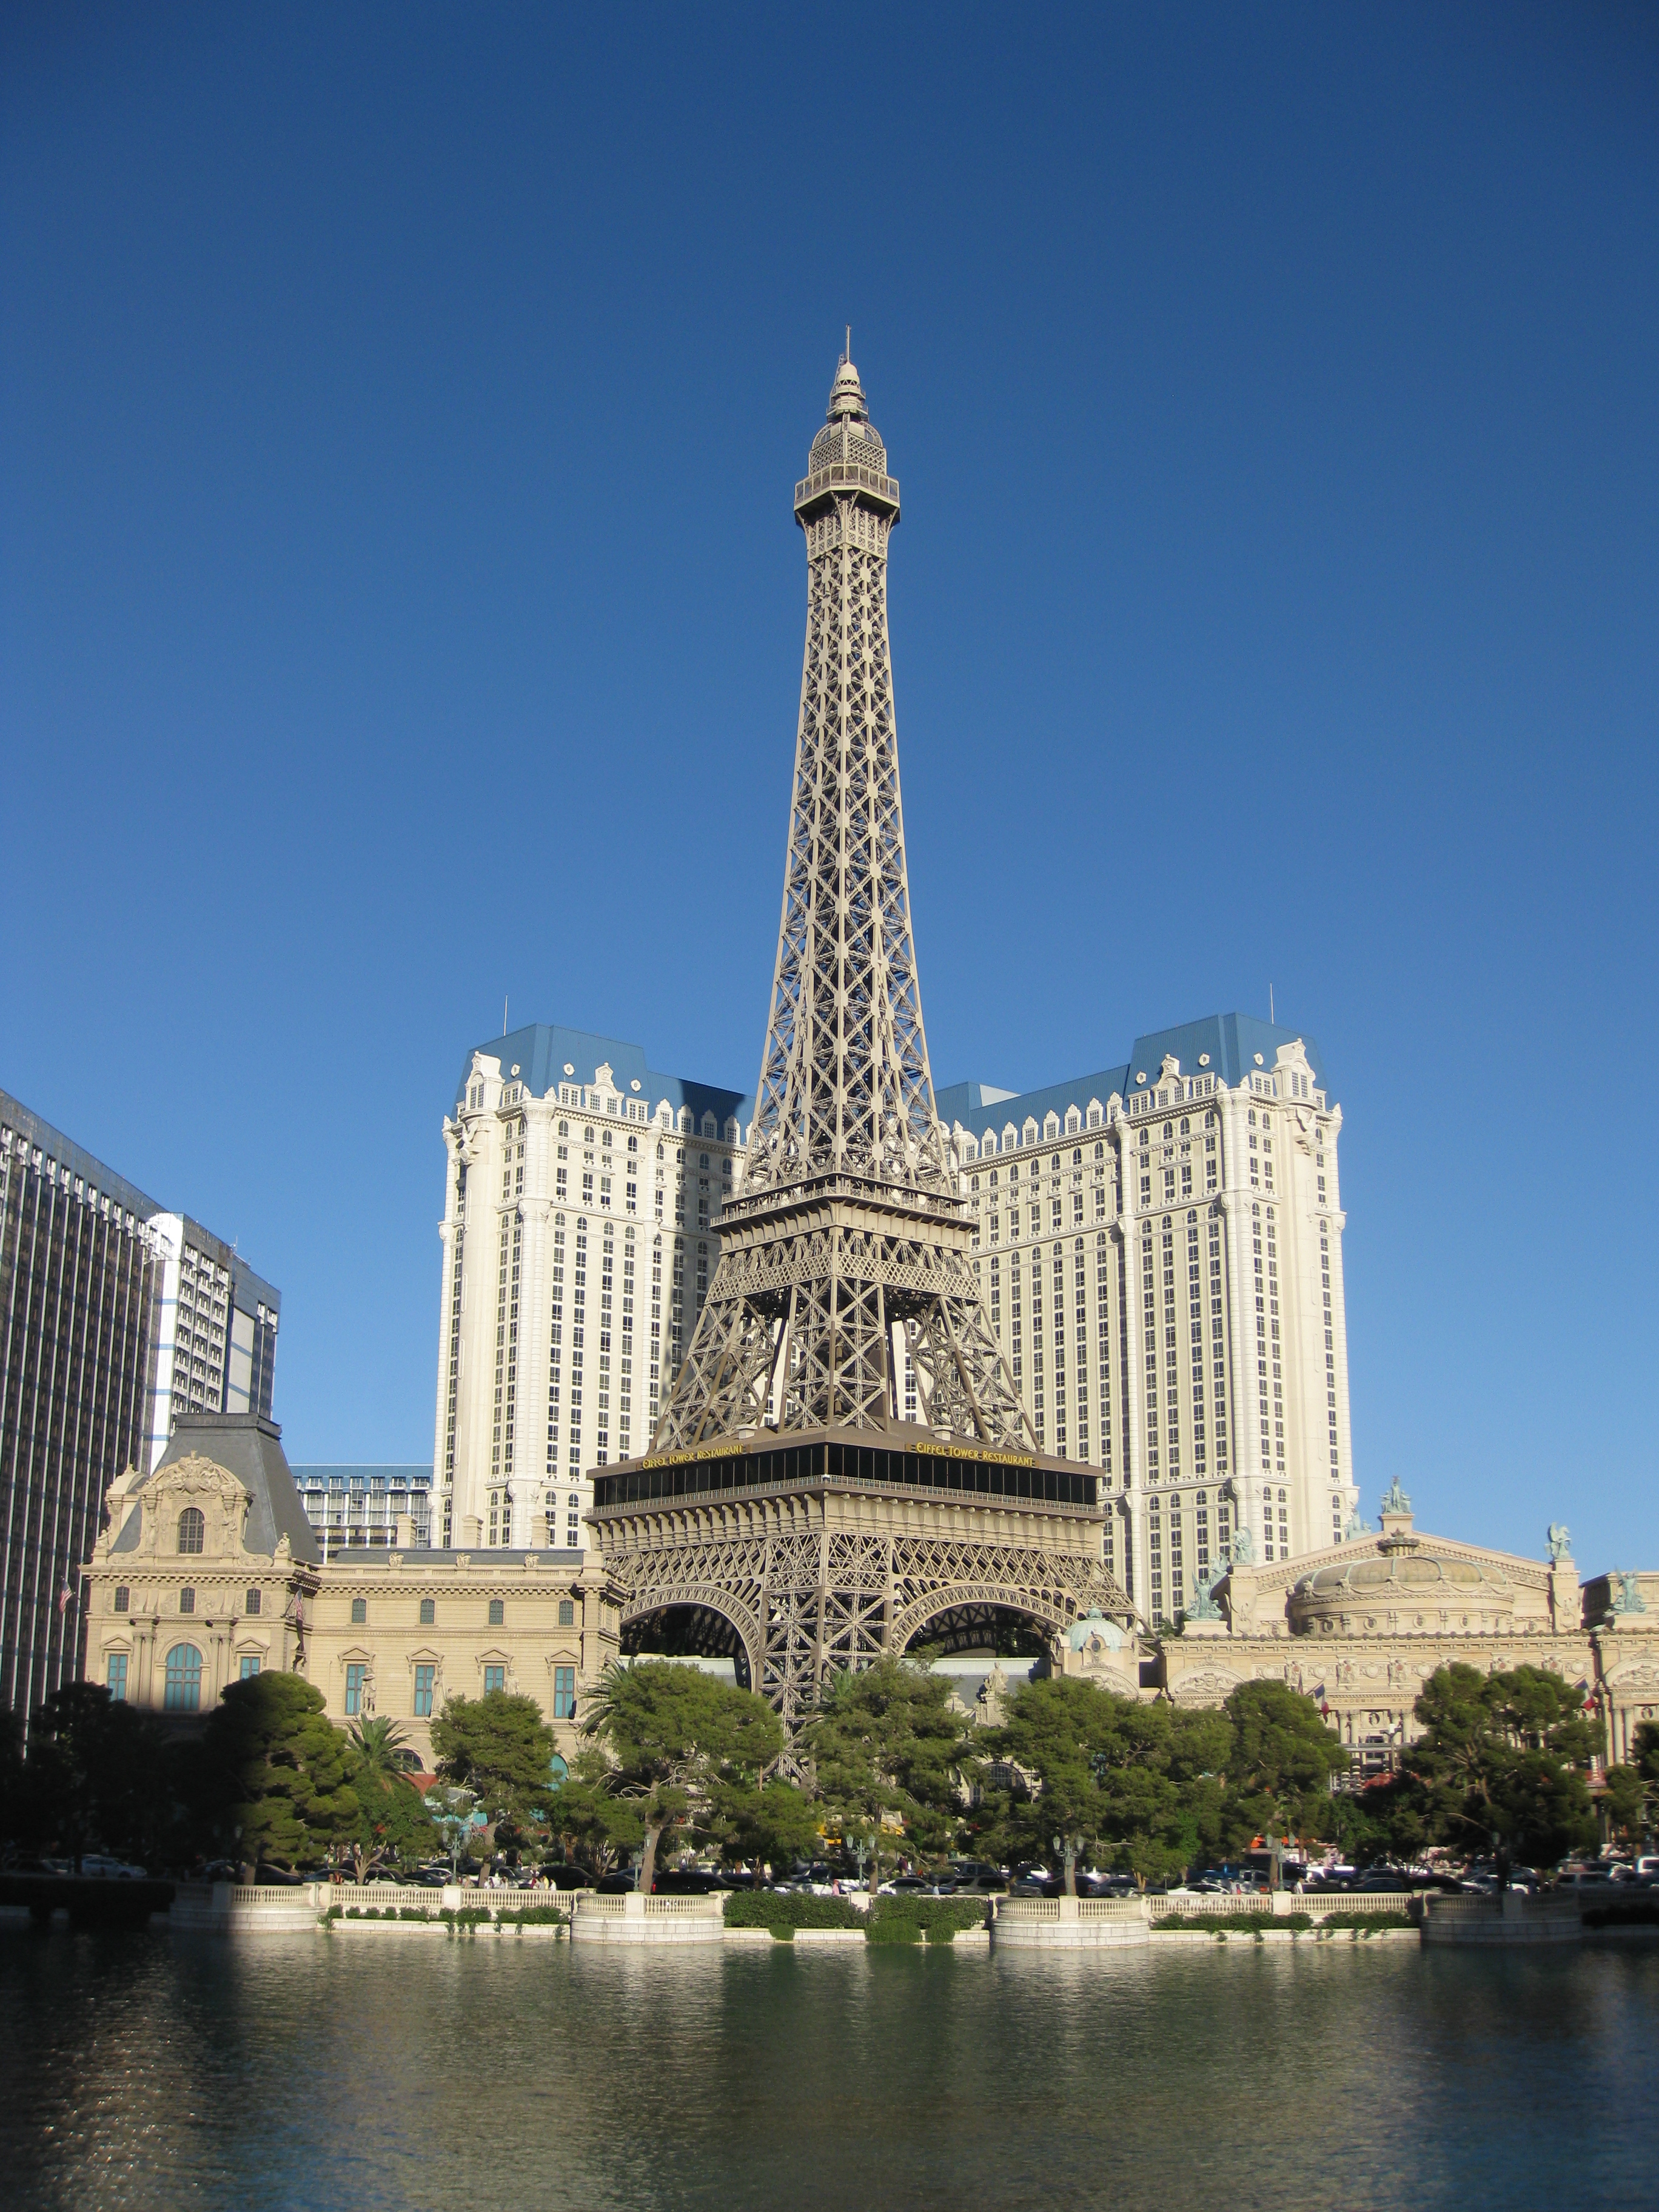 File:Paris Las Vegas Eiffel Tower 2010.jpg - Wikimedia Commons